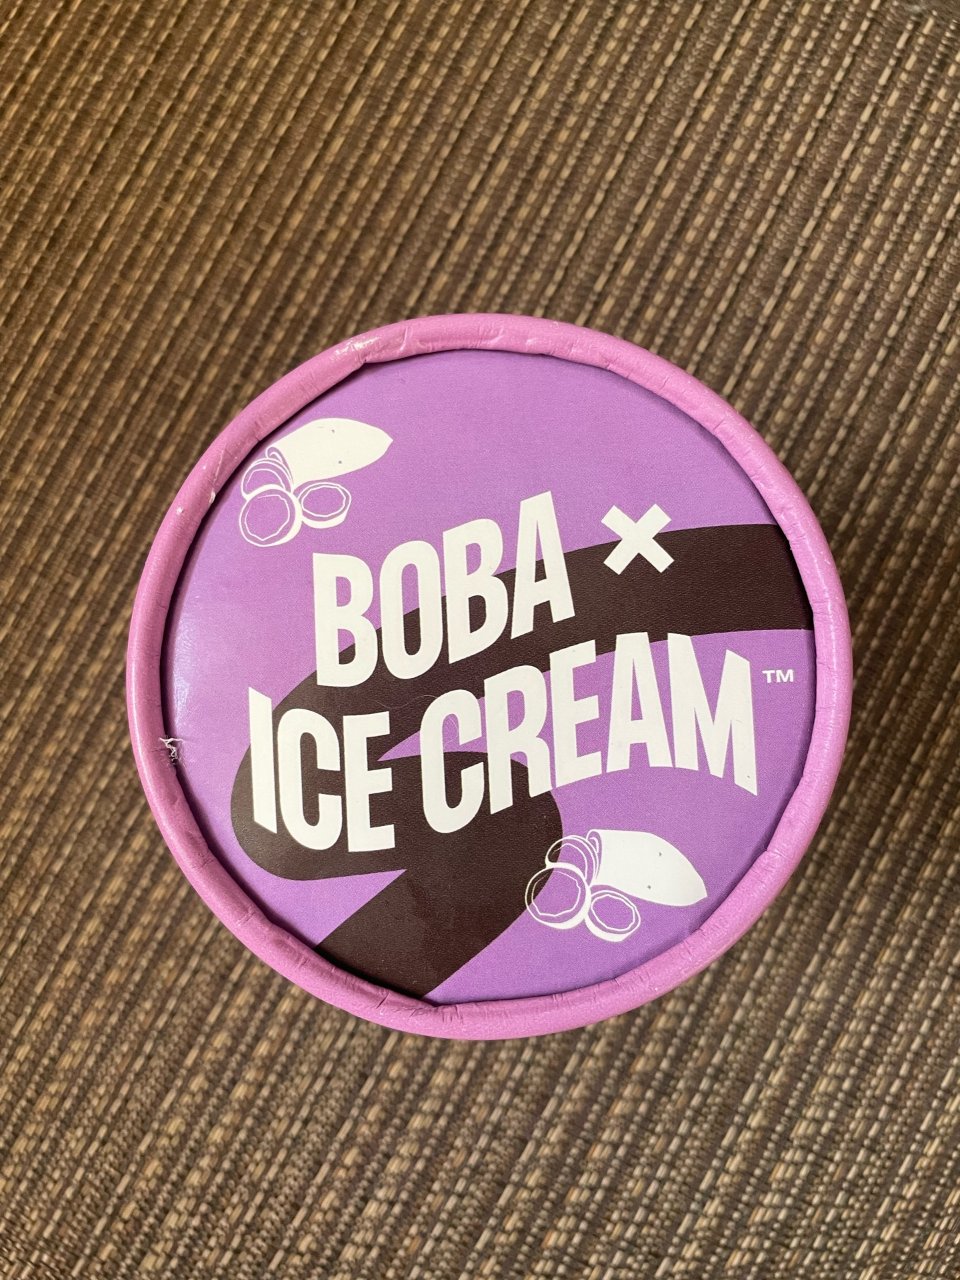 Boba ice cream